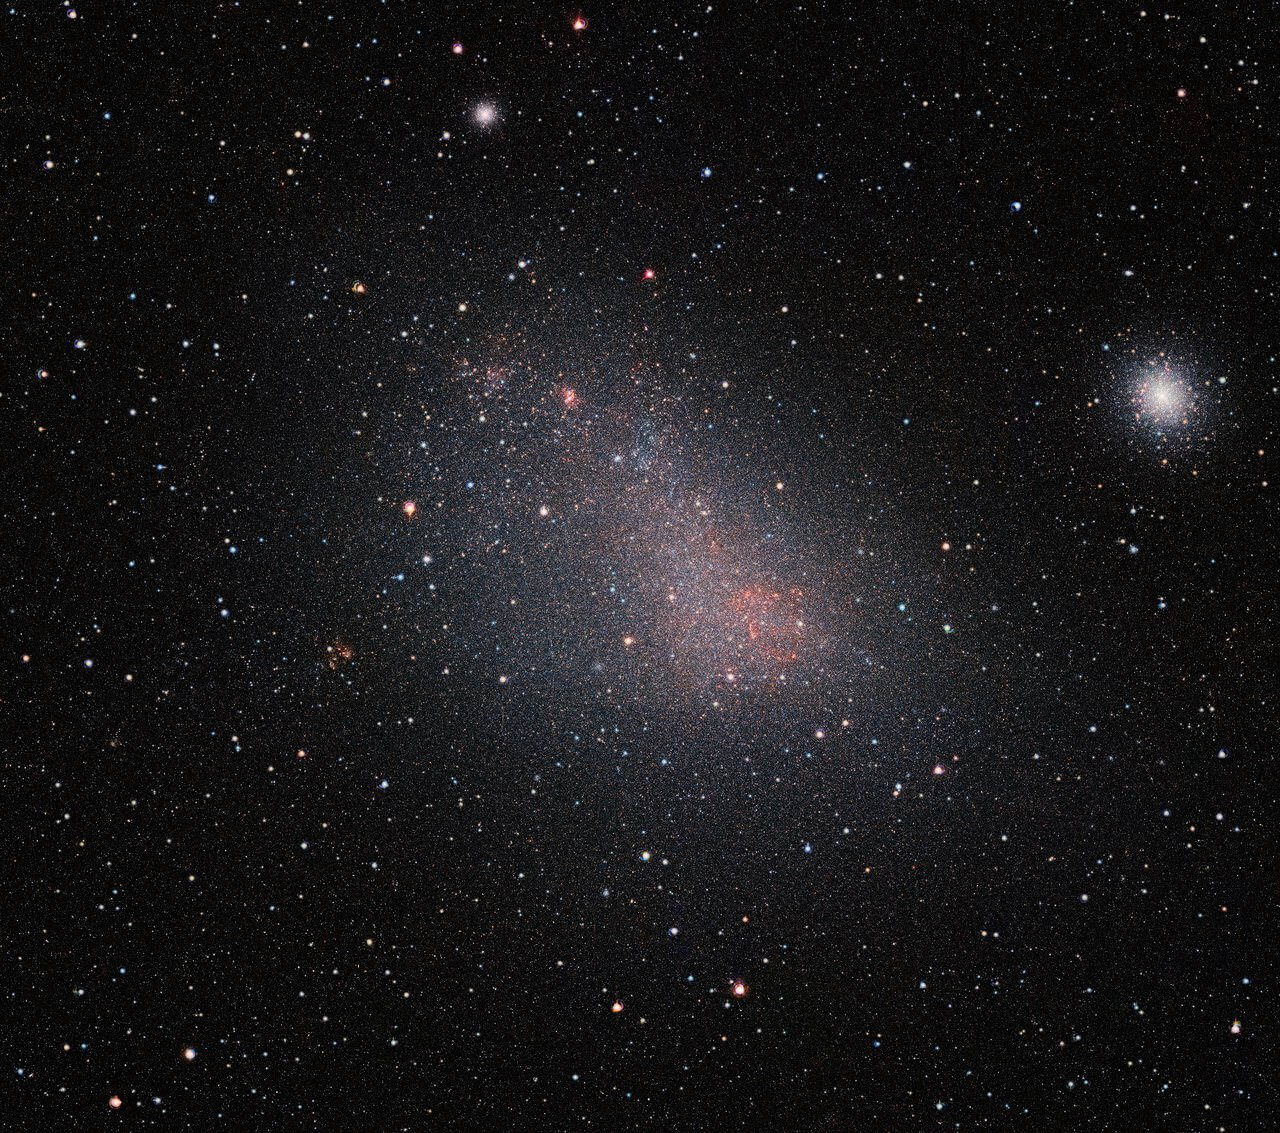 The Small Magellanic Cloud (SMC) galaxy. Credit: ESA/VISTA